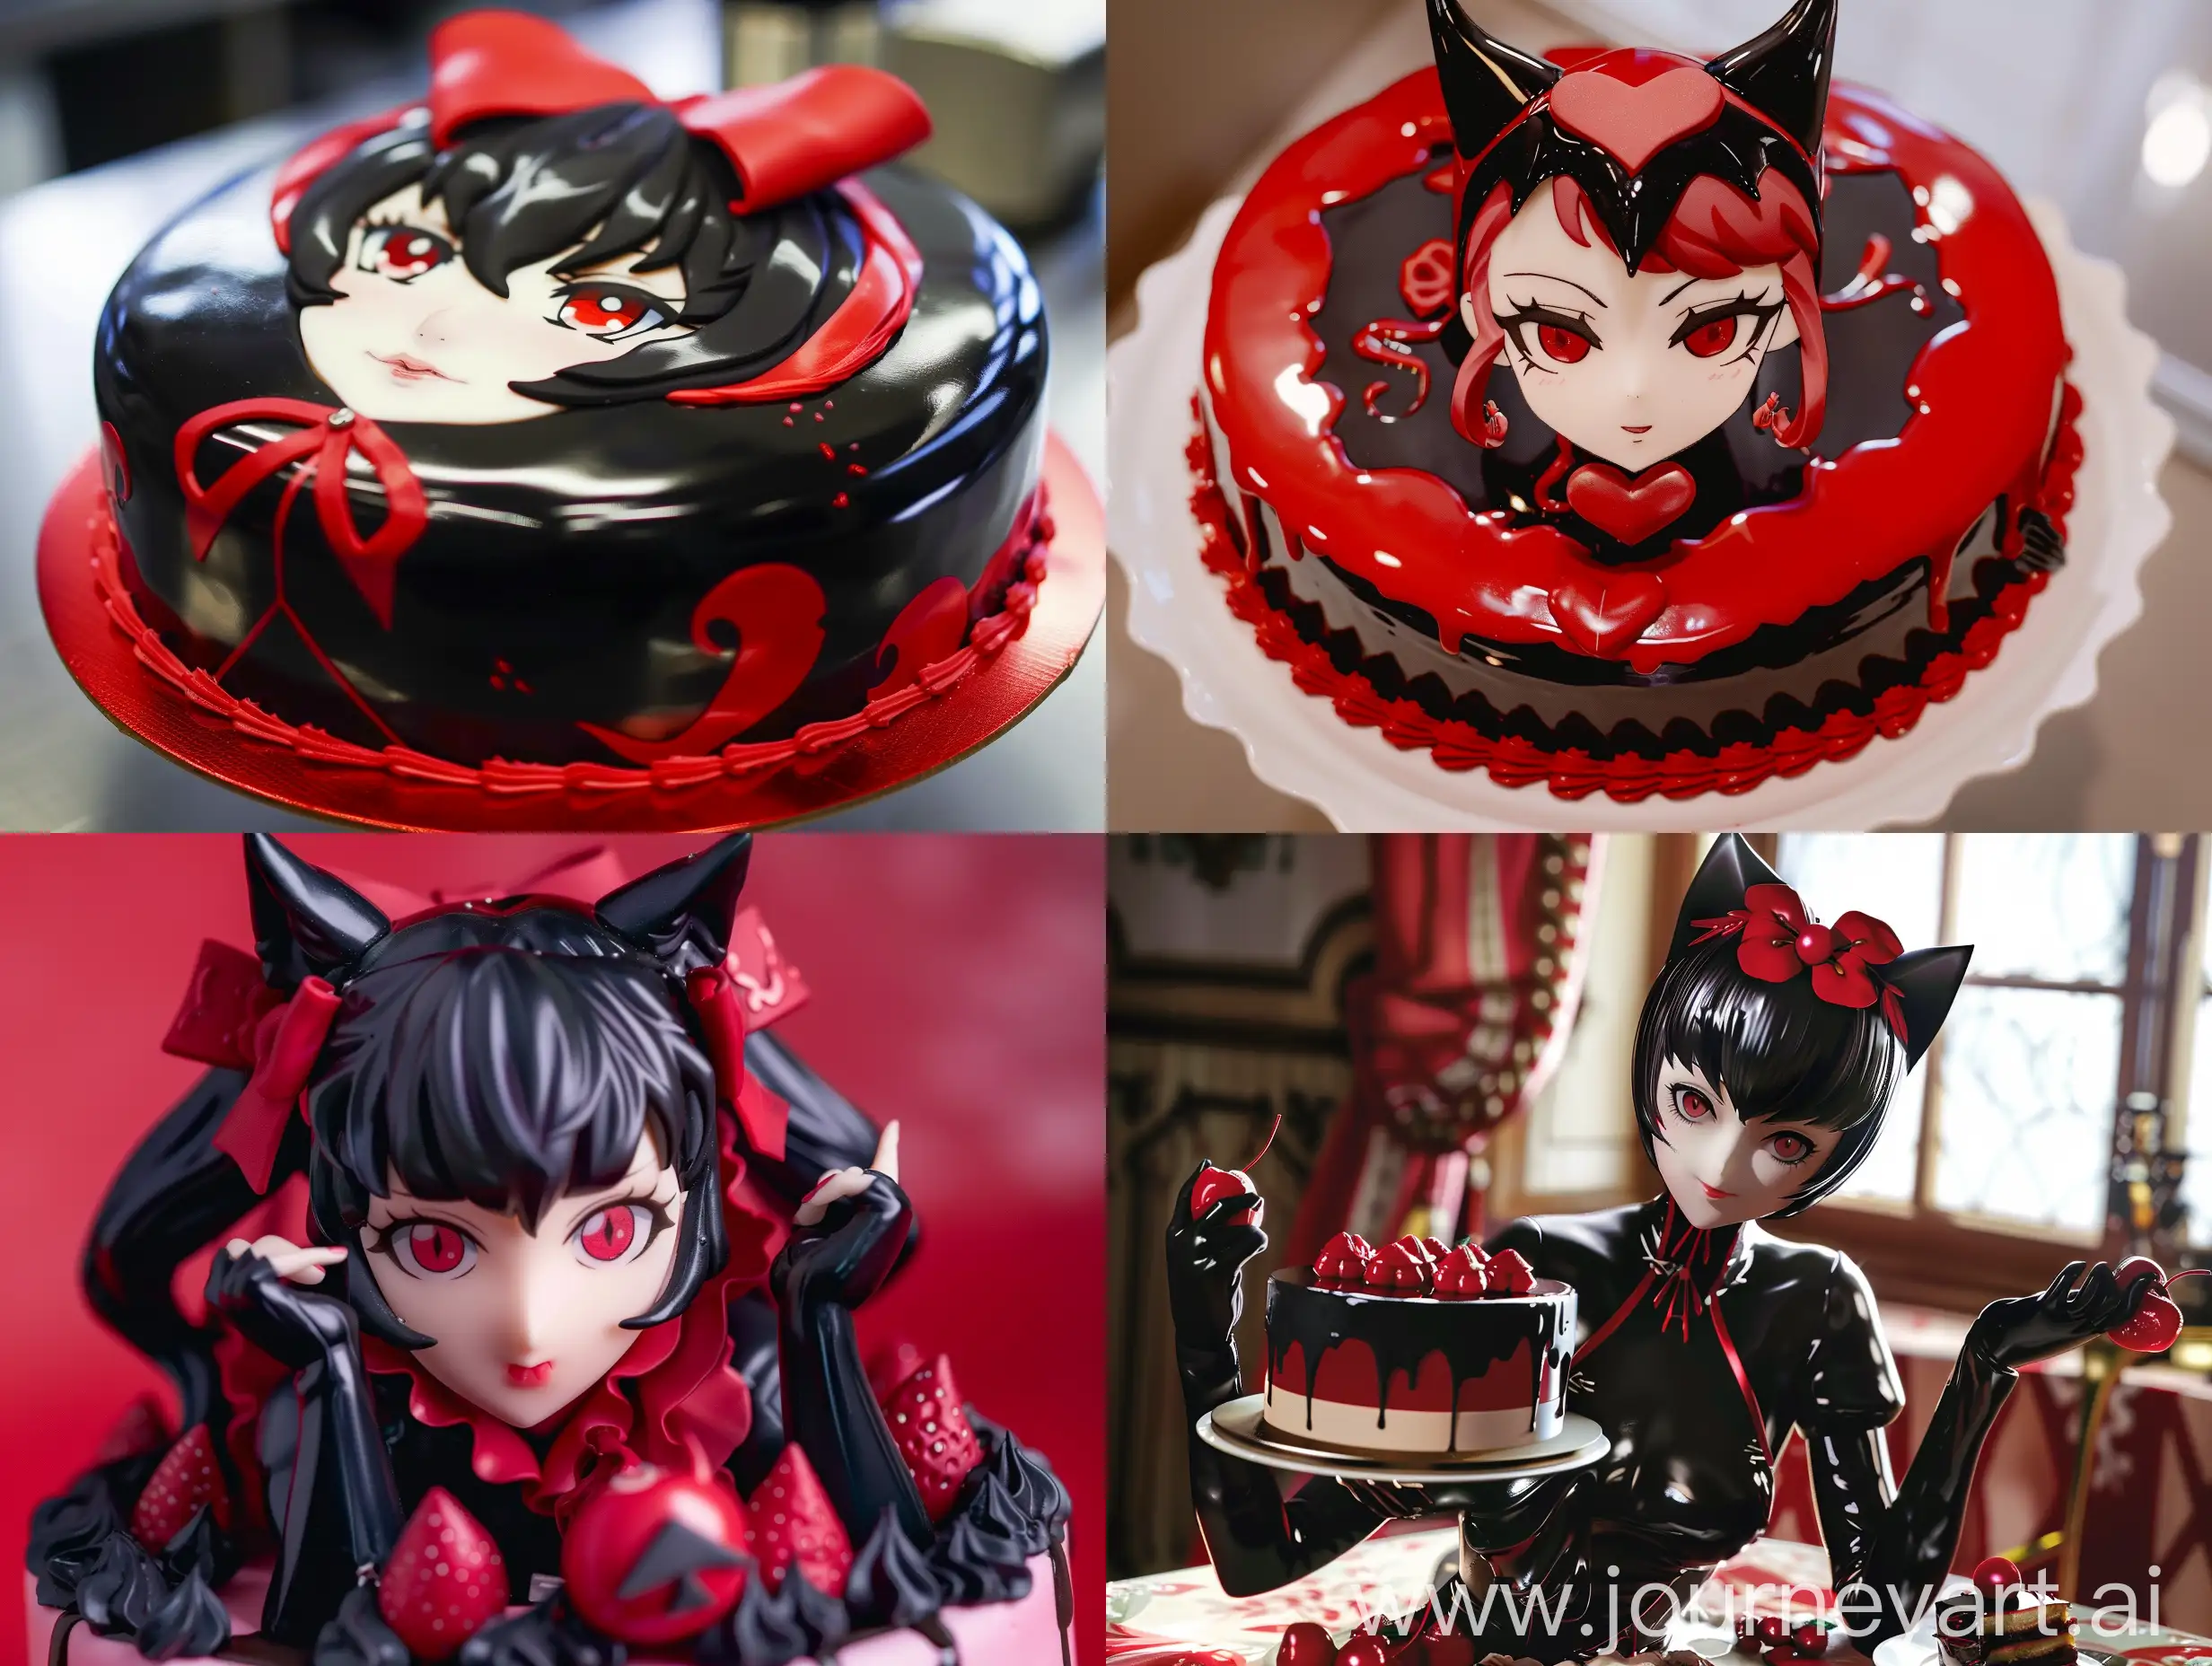 Morgana from persona 5 KEEPS CAKE